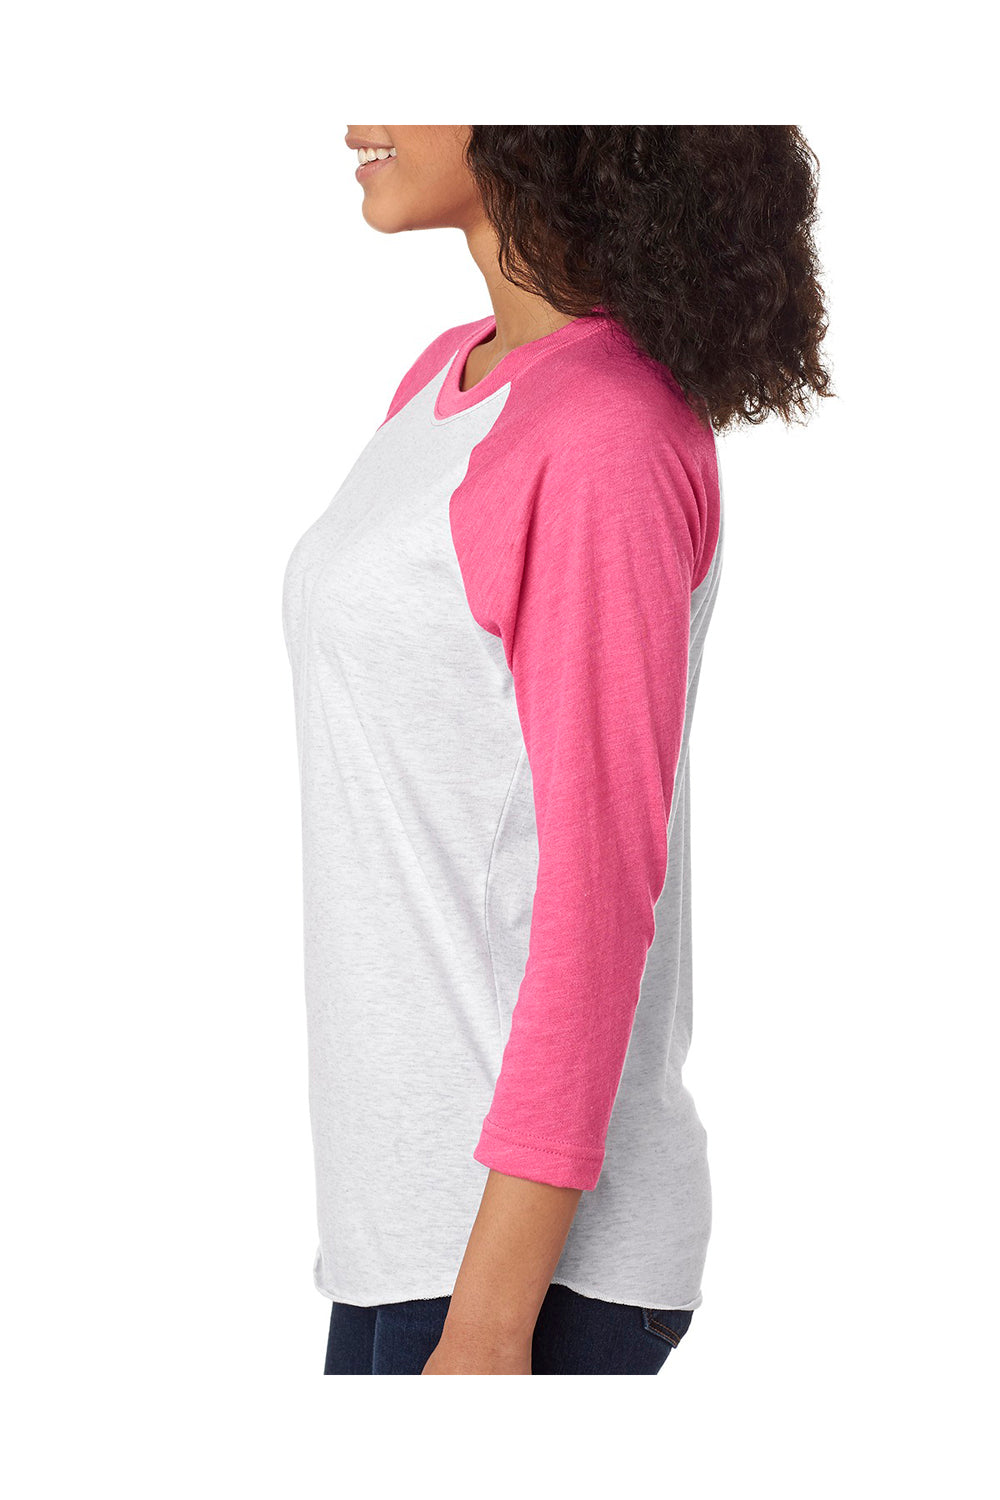 Next Level 6051 Mens Jersey 3/4 Sleeve Crewneck T-Shirt Heather White/Pink Side